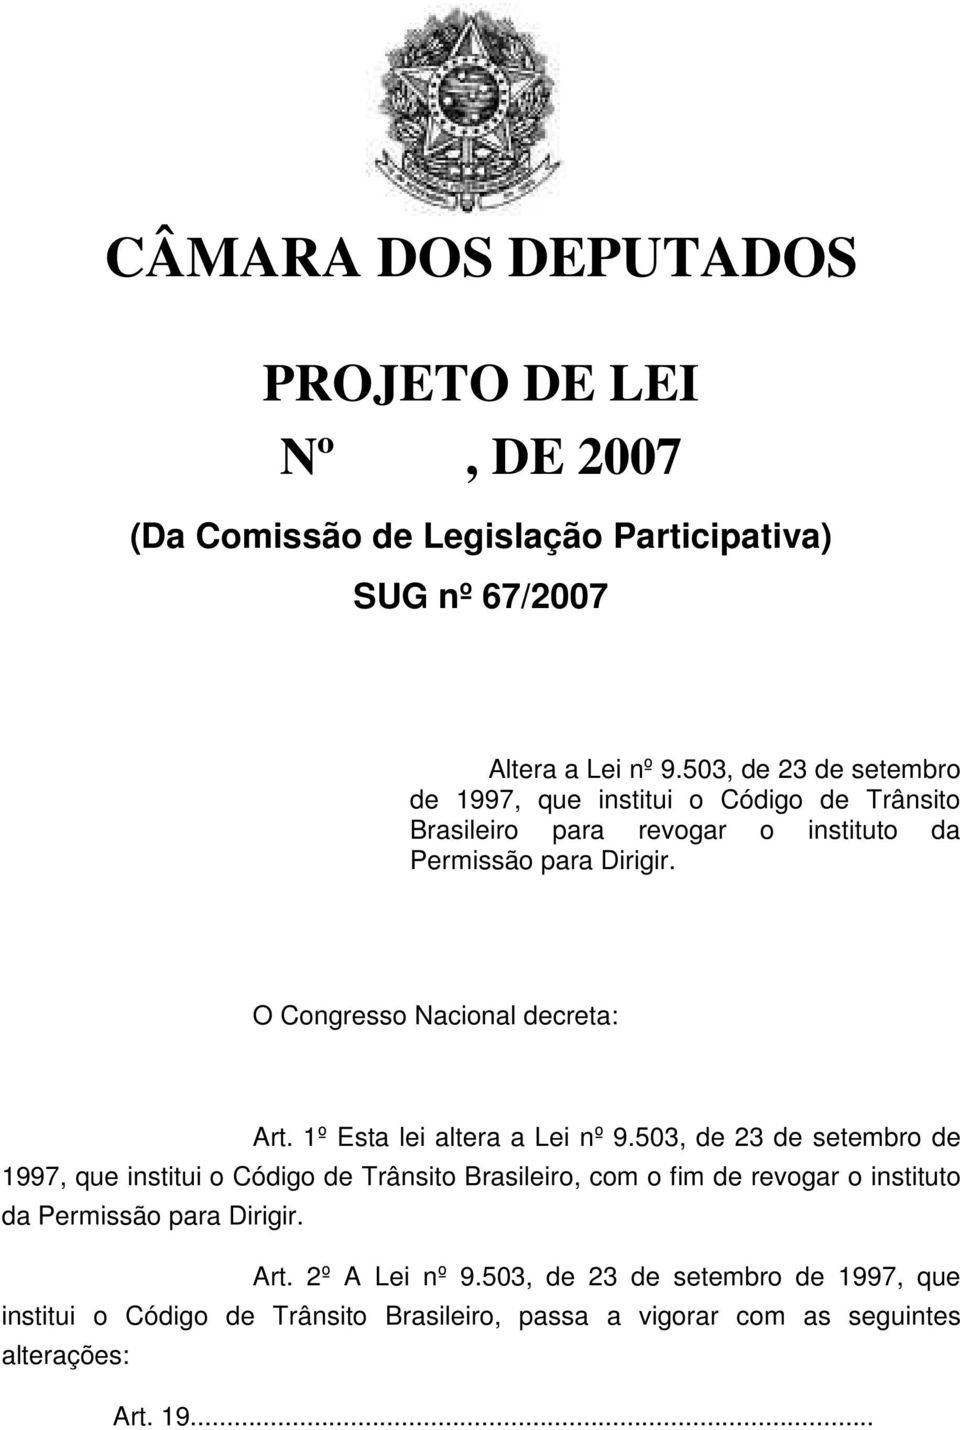 O Congresso Nacional decreta: Art. 1º Esta lei altera a Lei nº 9.